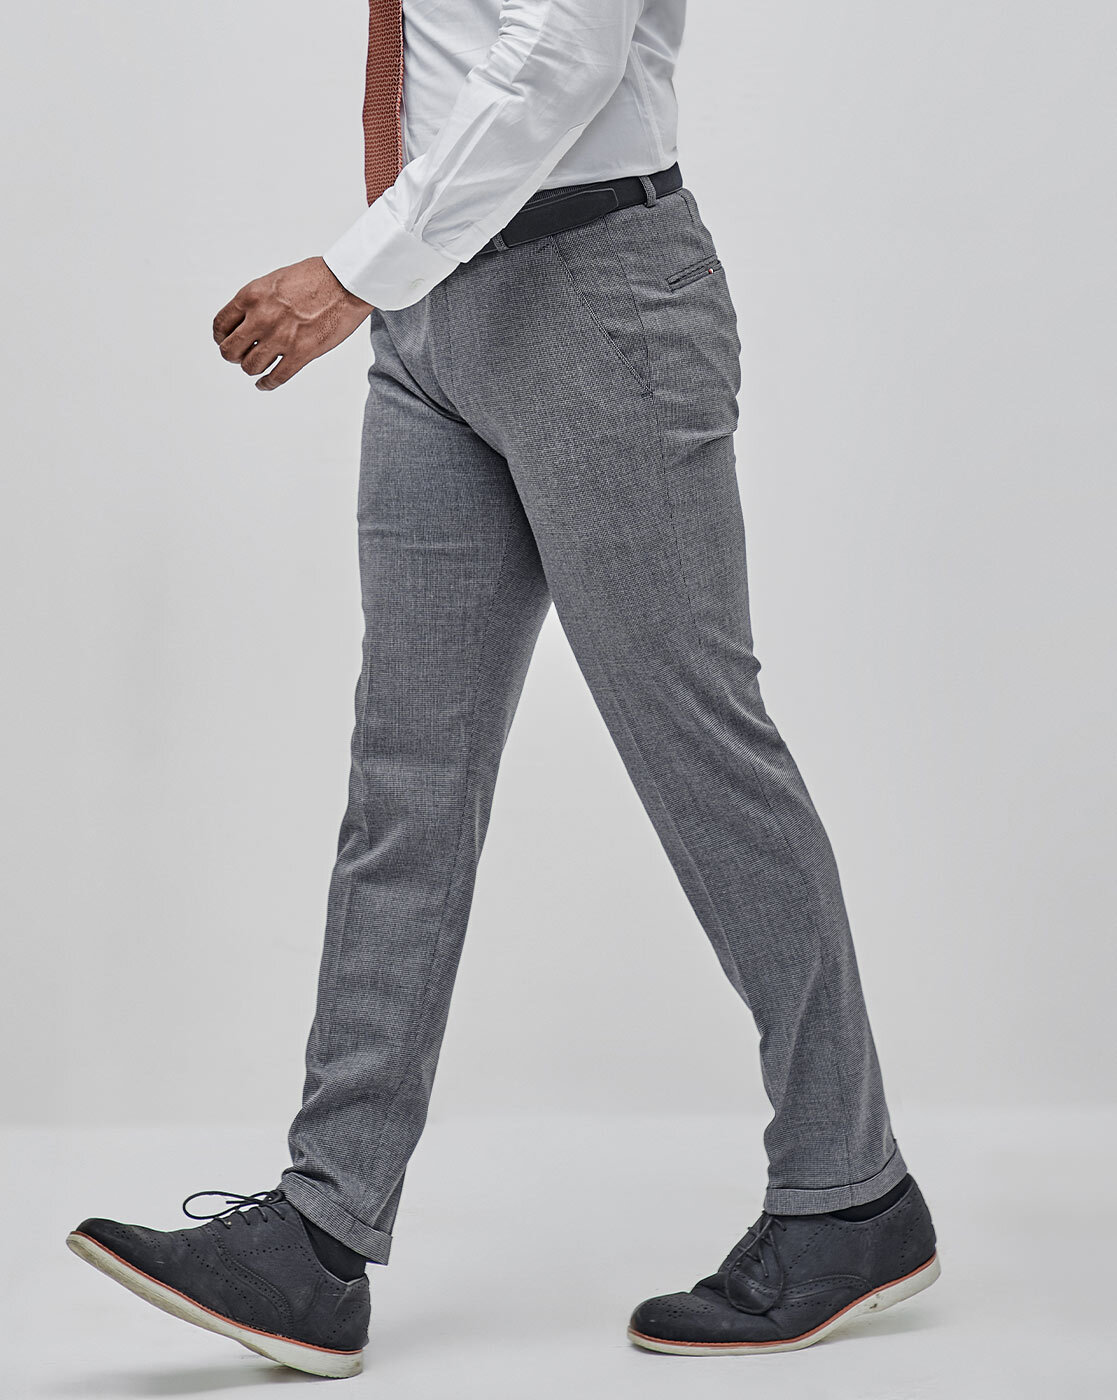 b.young PANTS - Trousers - light grey melange mix/light grey - Zalando.co.uk